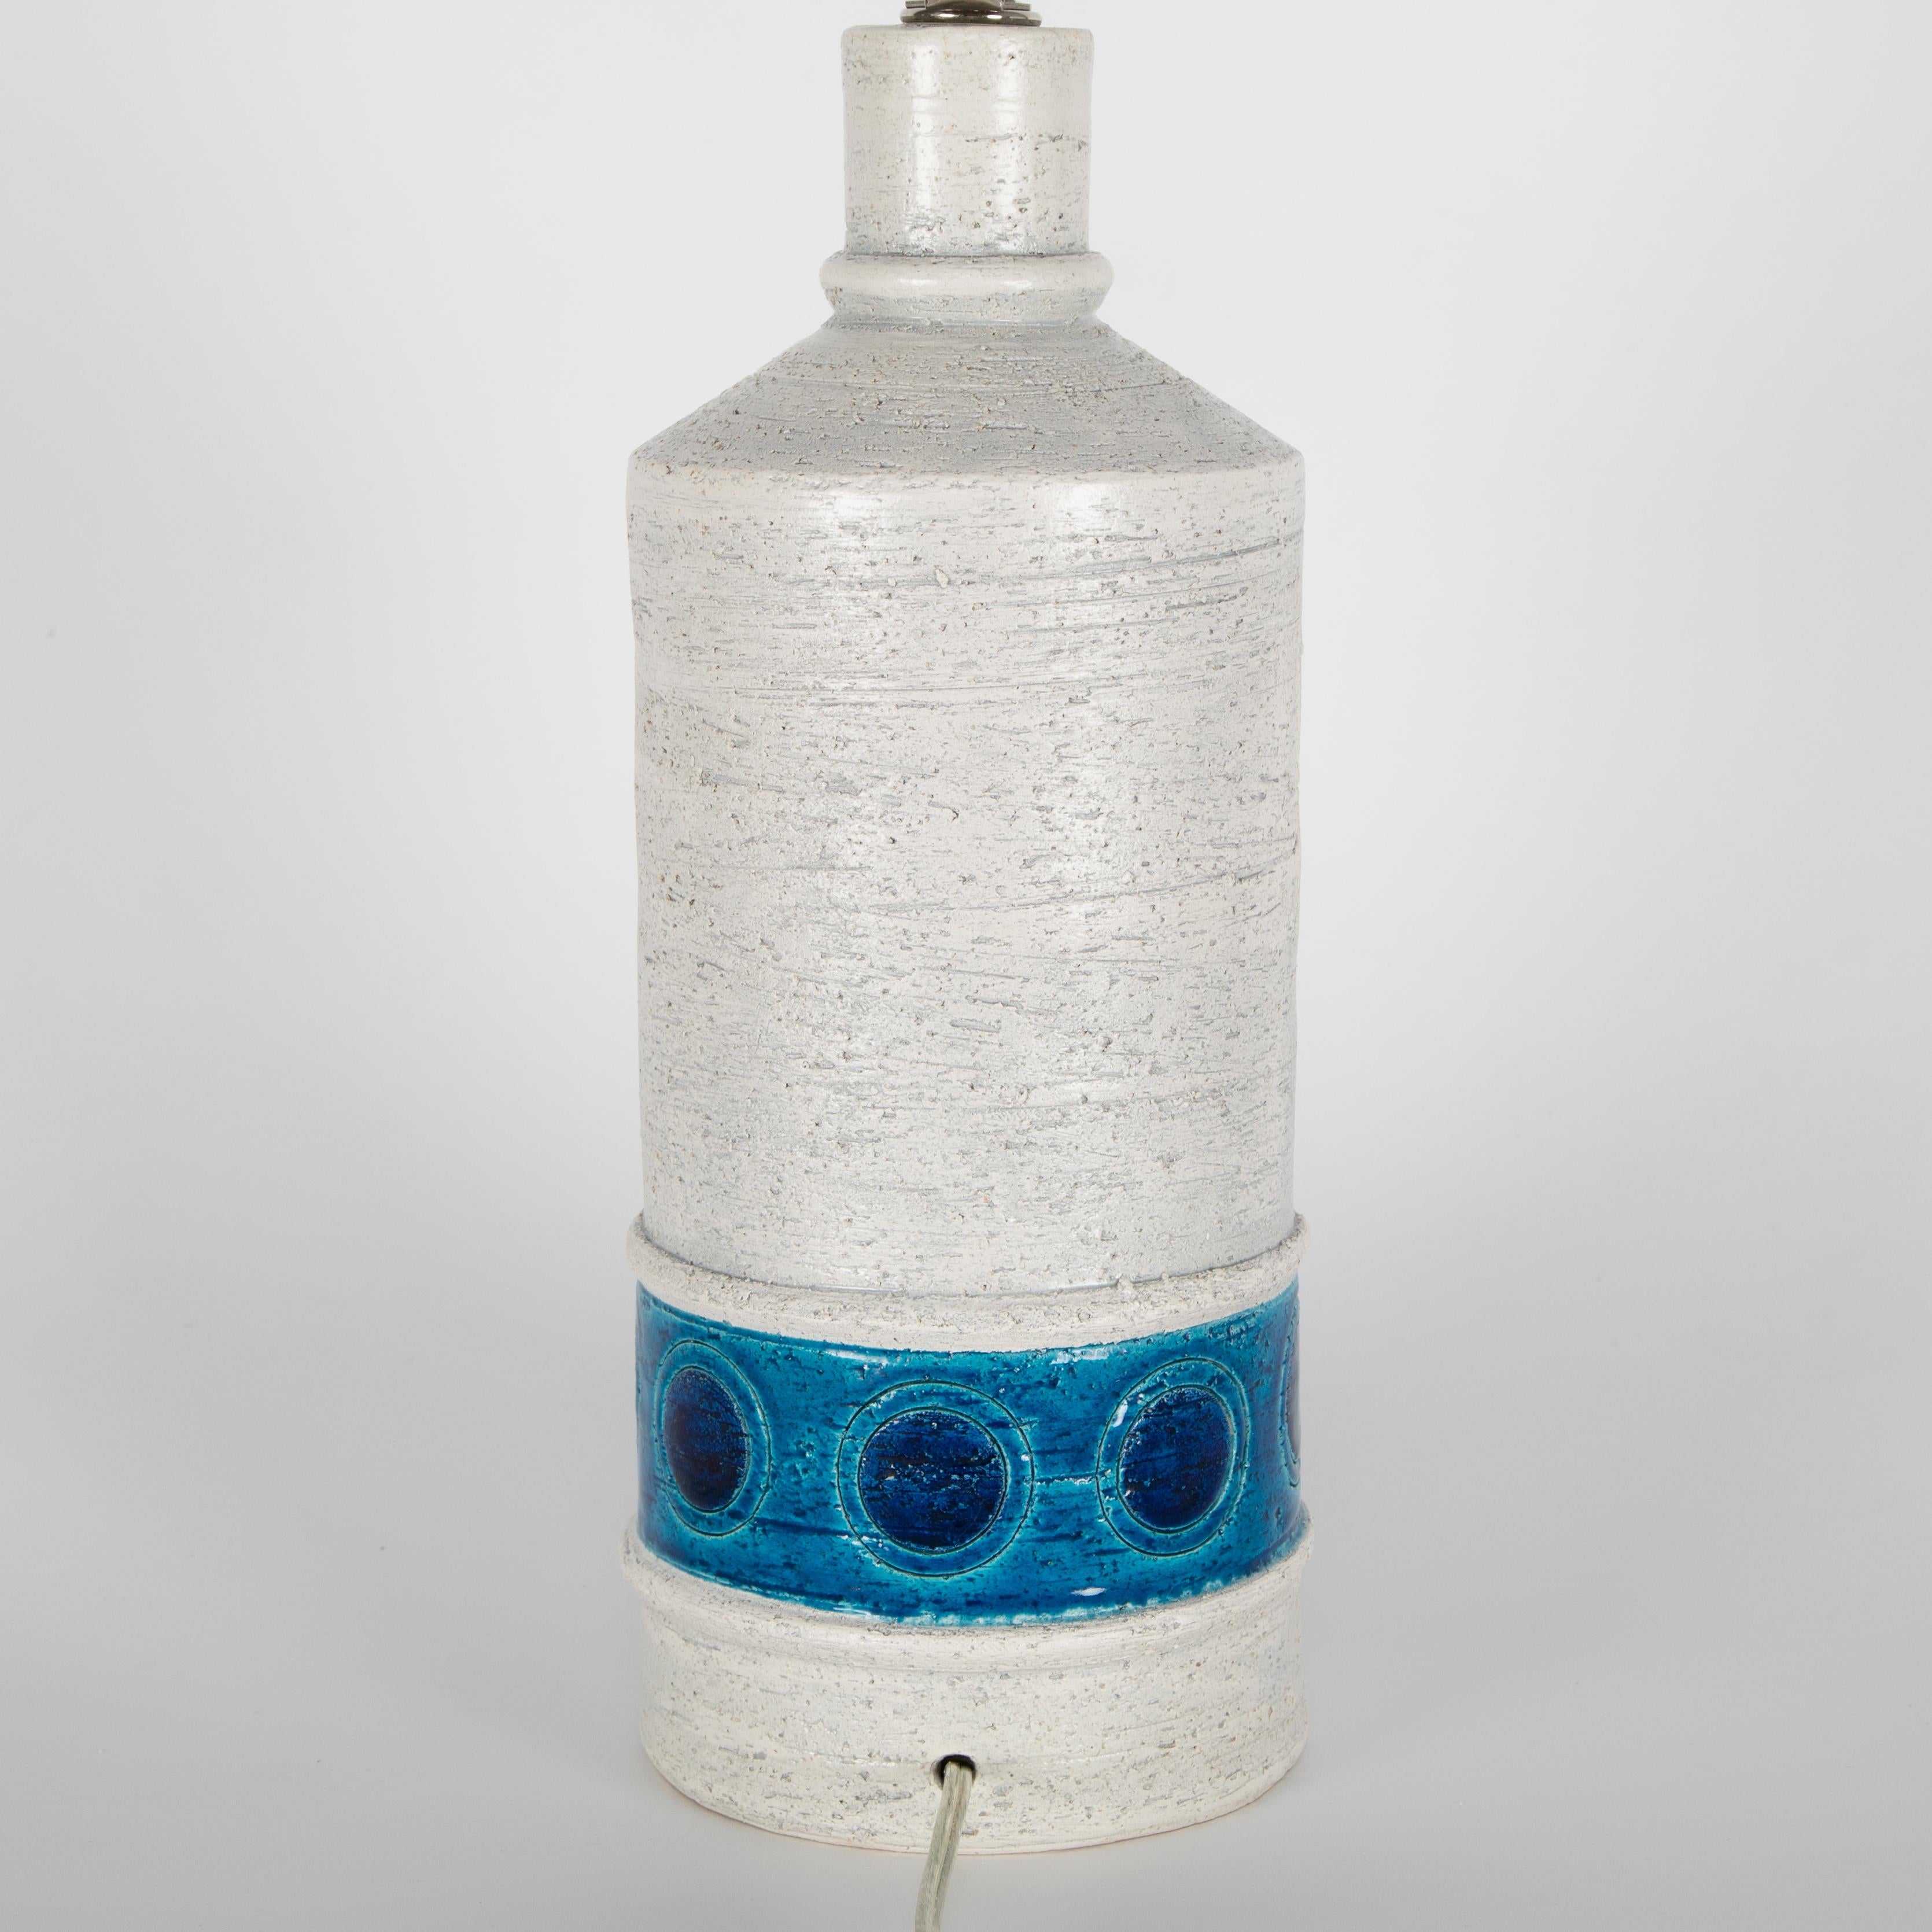 Aldo Londi for Bitossi White and Blue Ceramic Table Lamps, circa 1950s For Sale 4